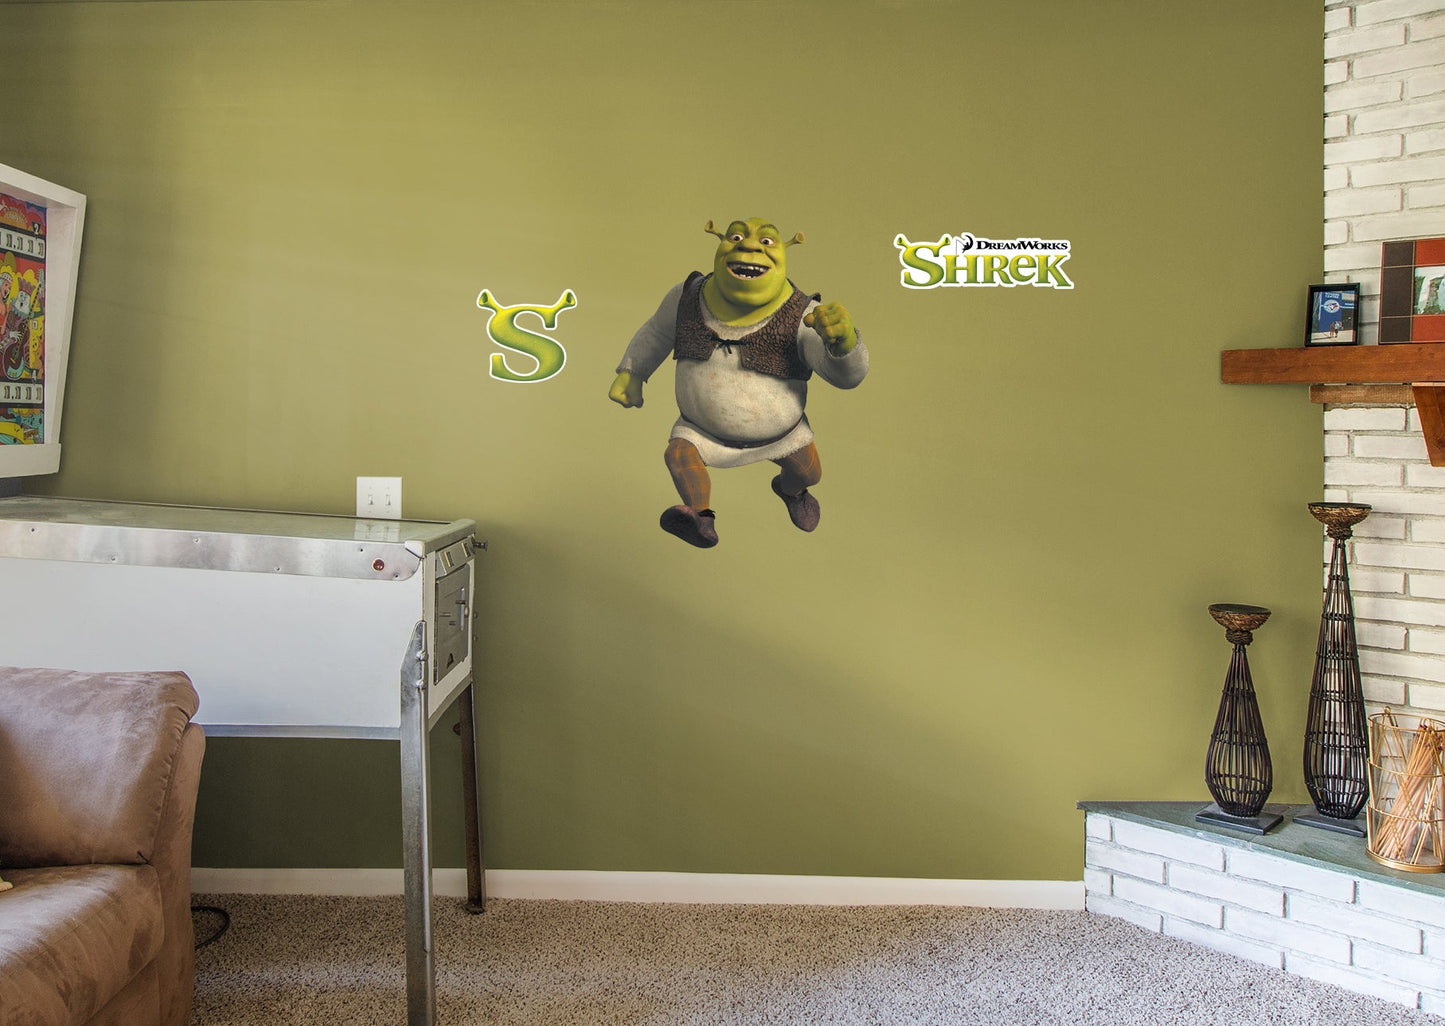 Shrek: Shrek Running RealBig - Officially Licensed NBC Universal Removable Adhesive Decal